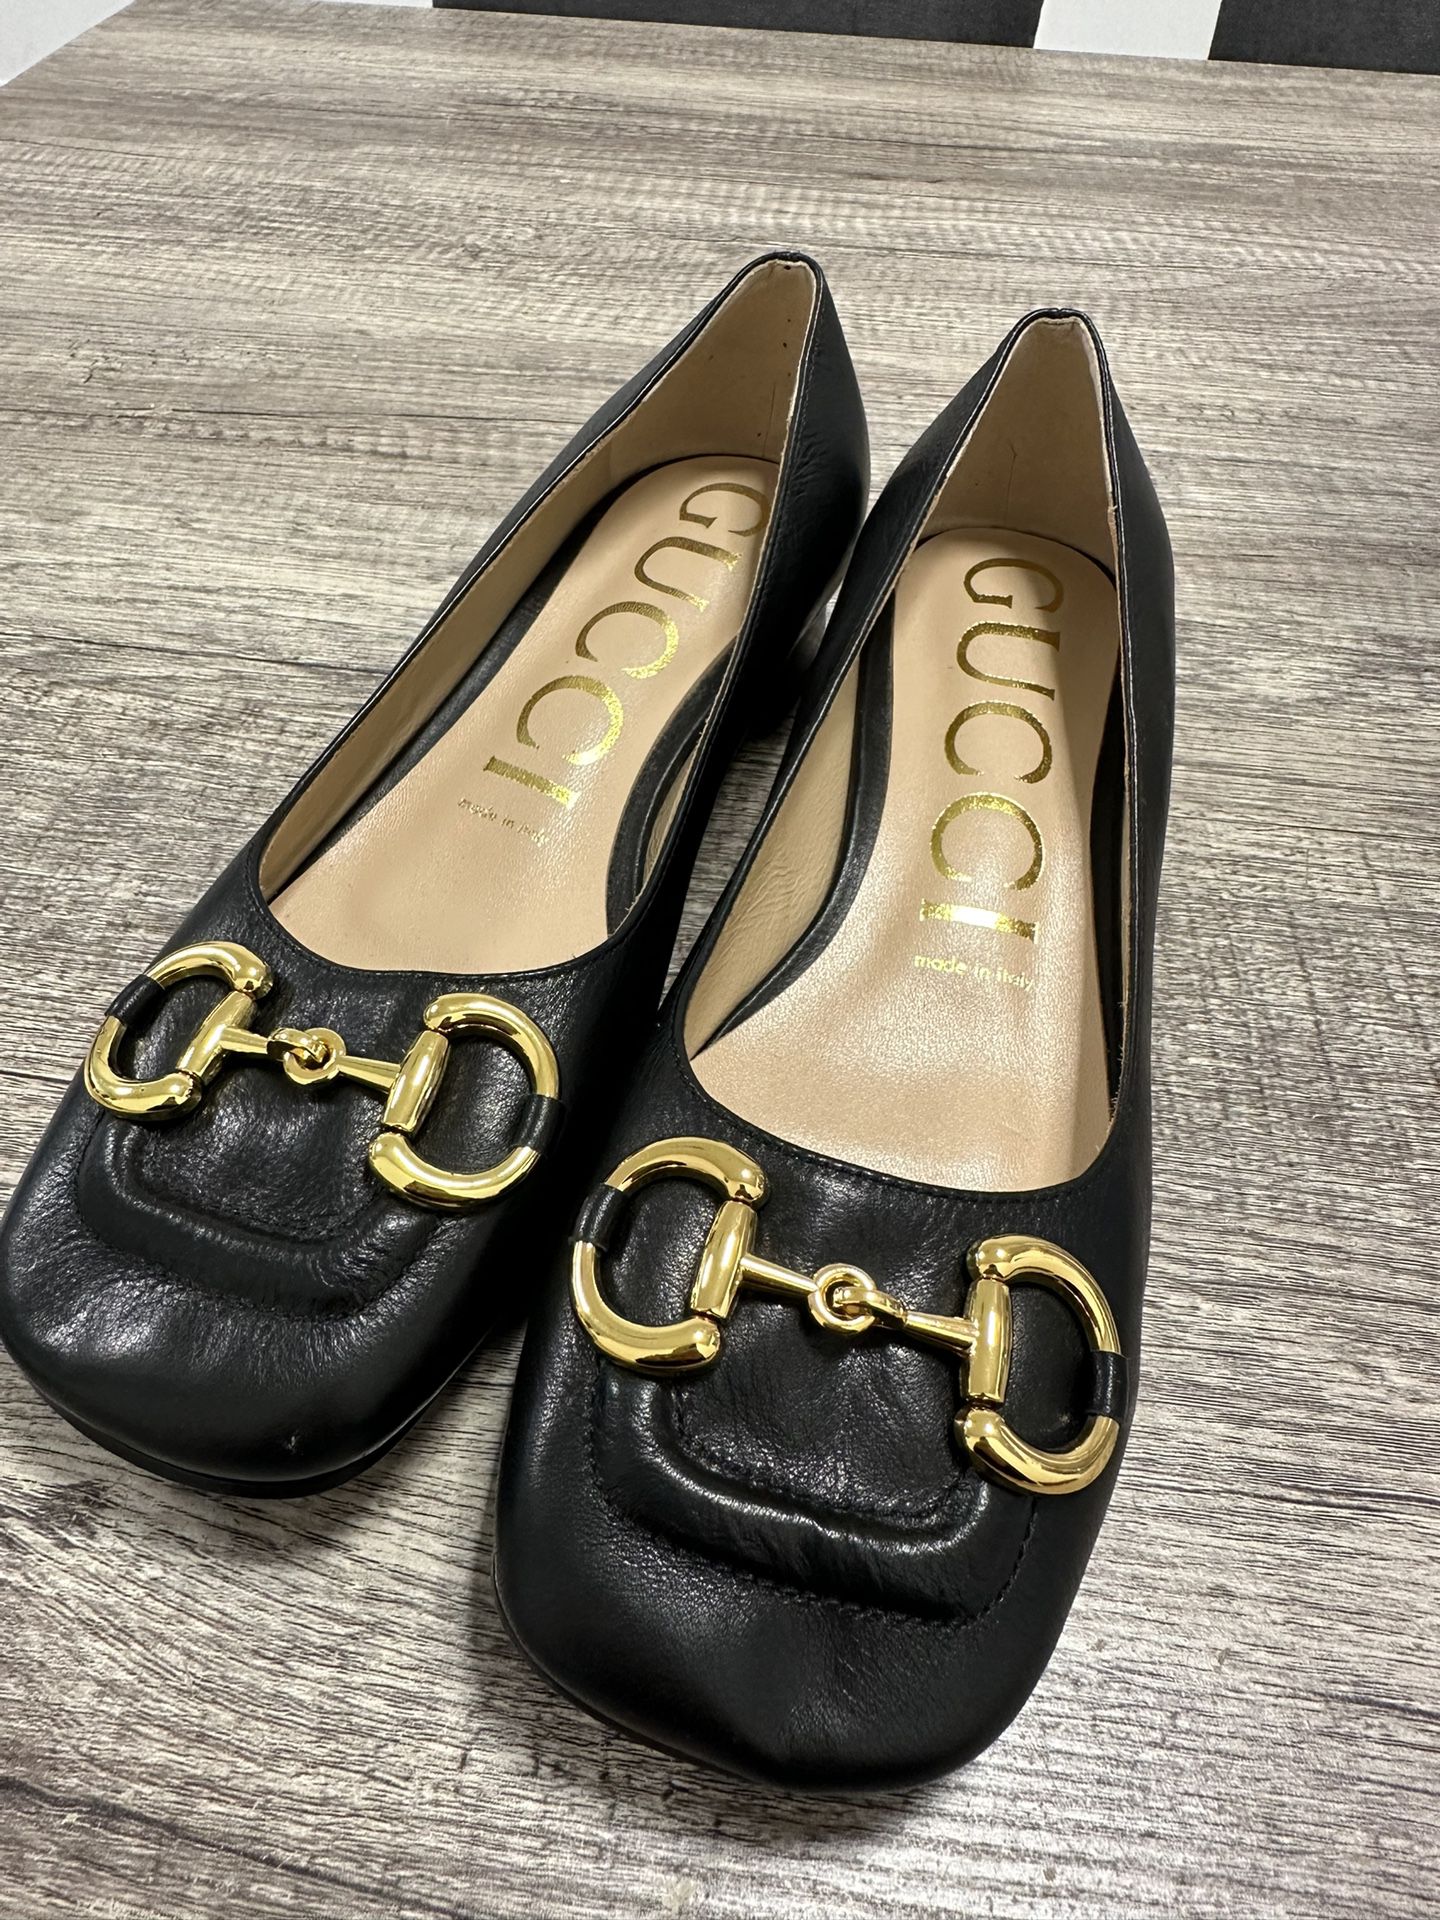 Gucci Shoe 